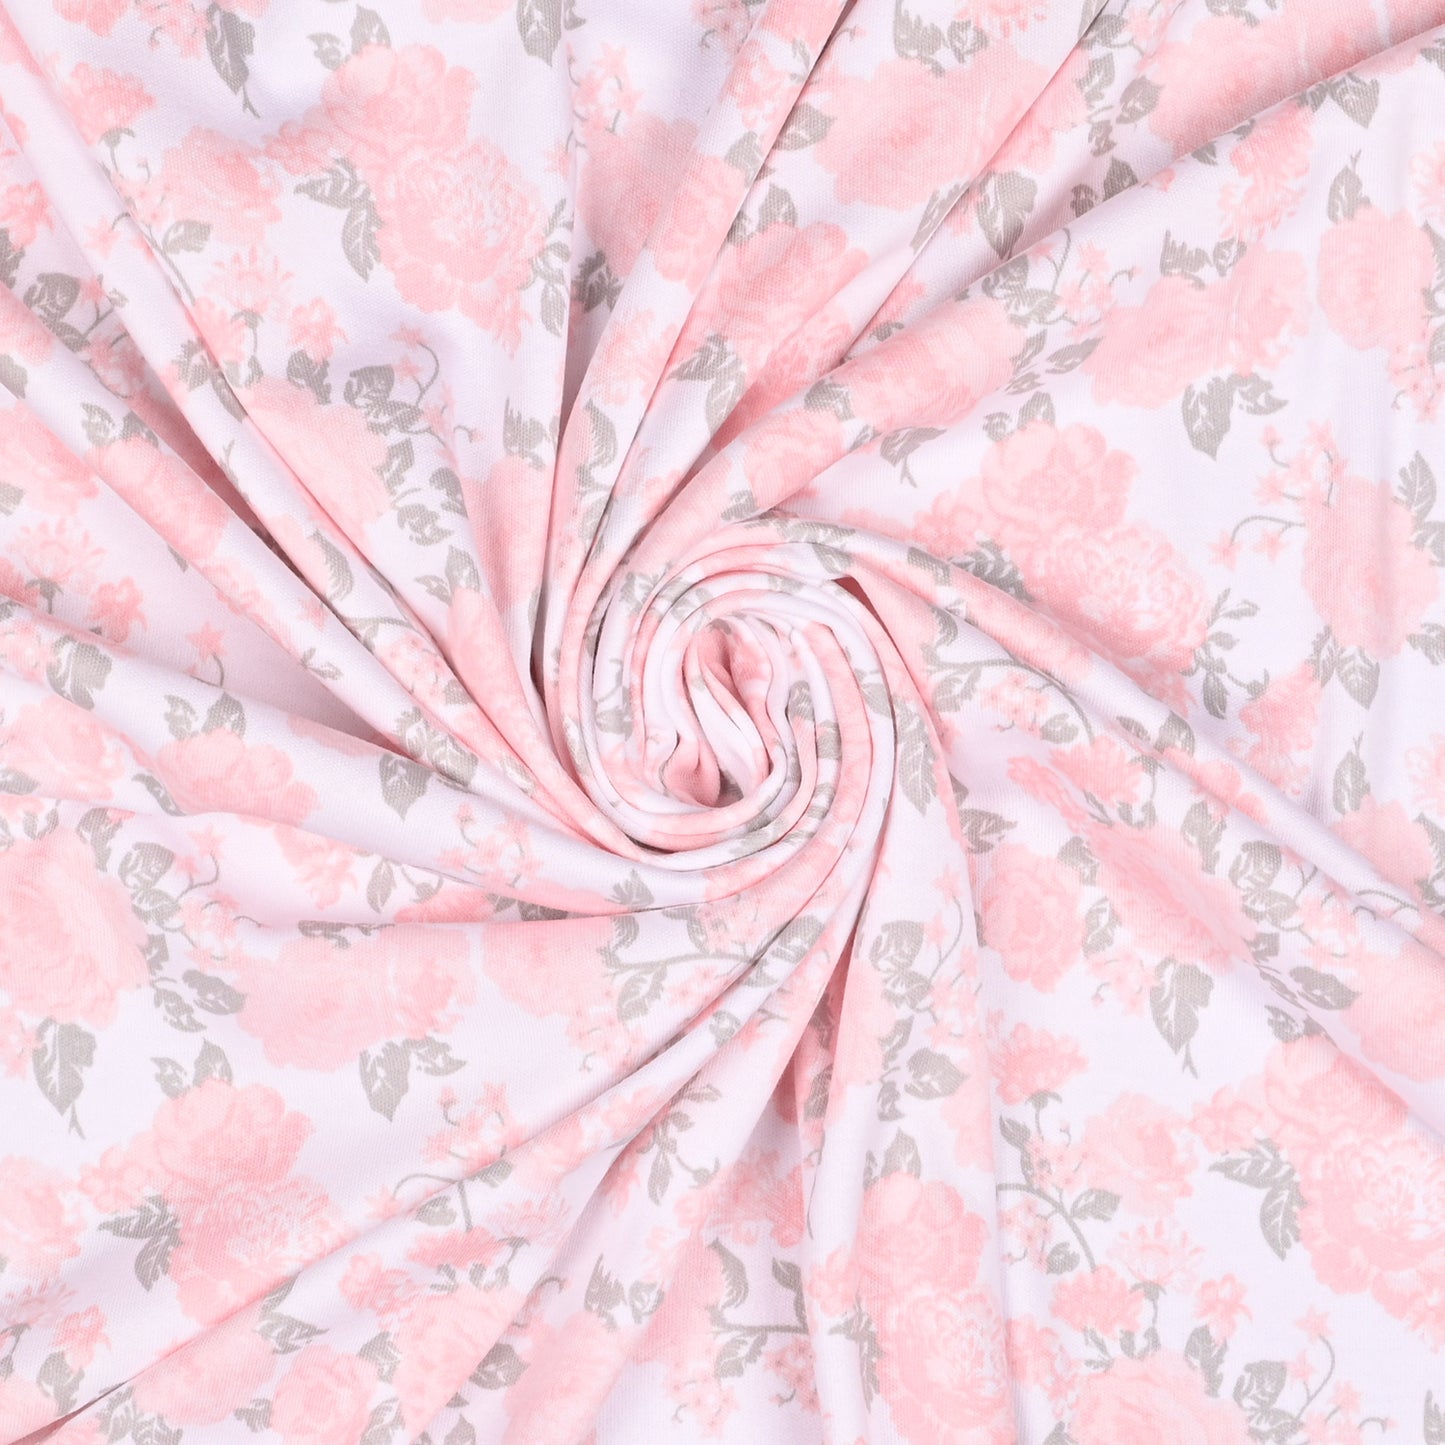 Cotton Knit Pink Floral